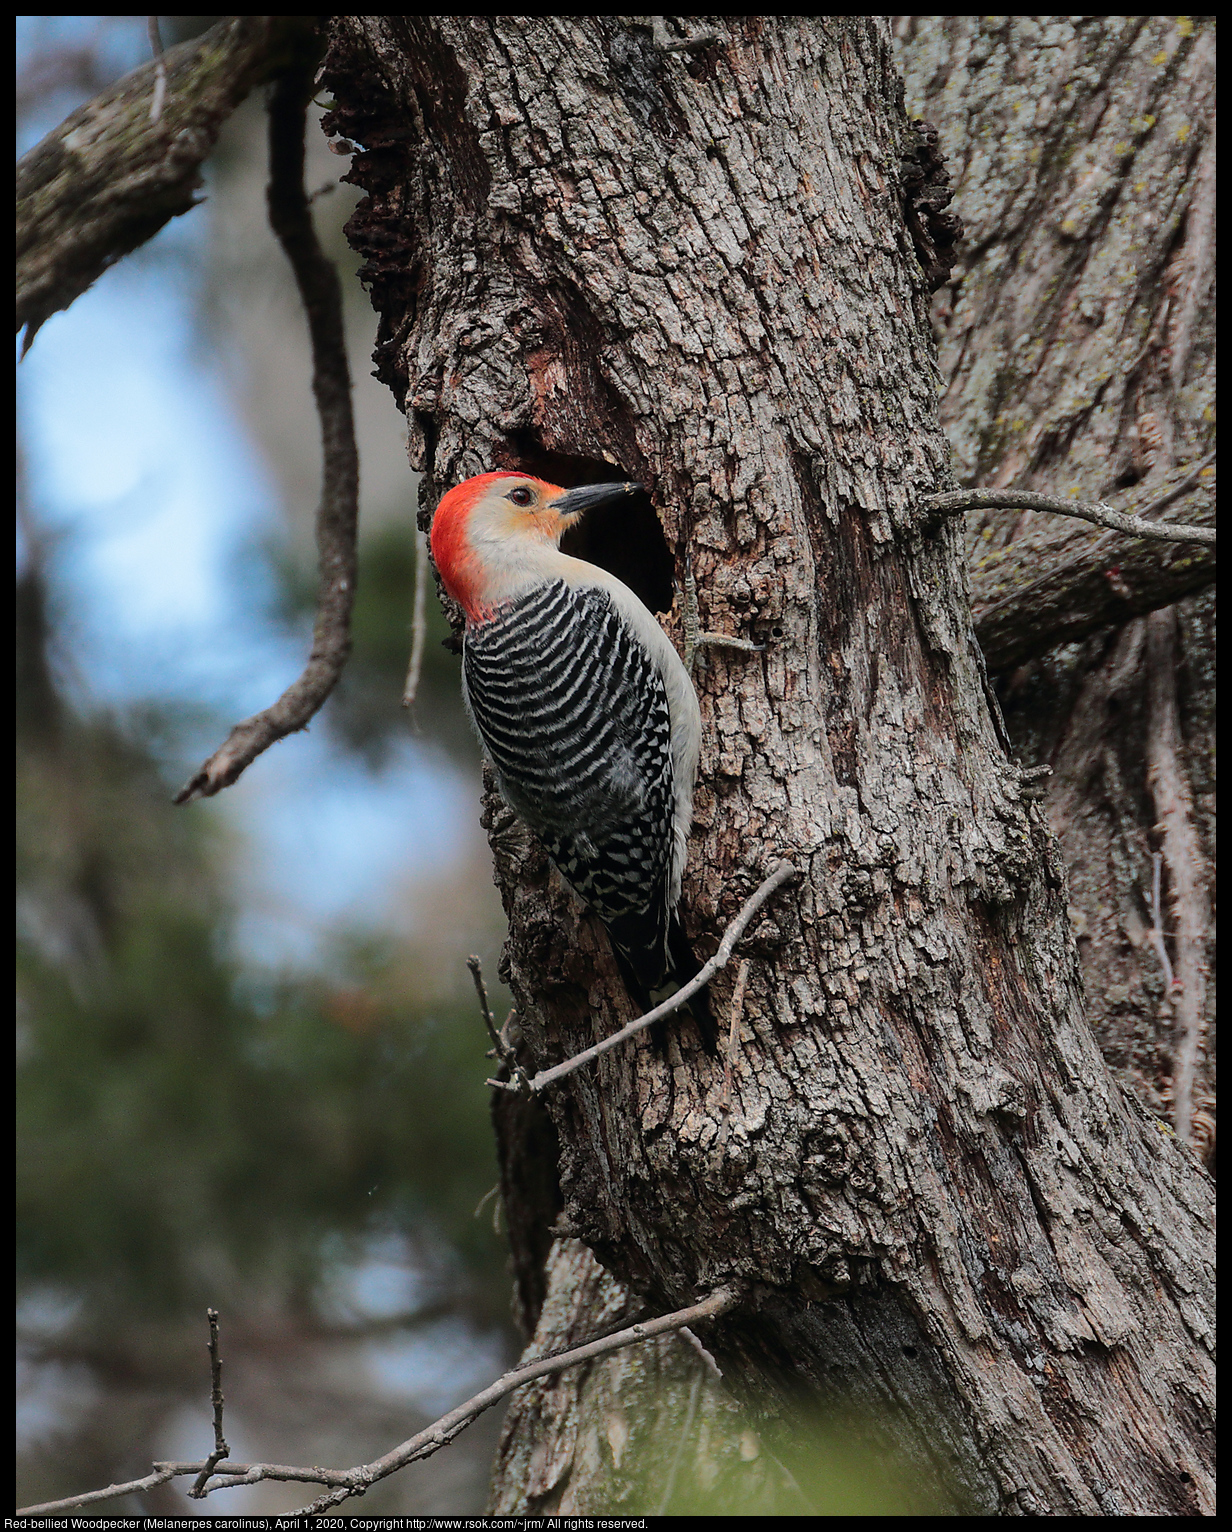 Red-bellied Woodpecker (Melanerpes carolinus), April 1, 2020